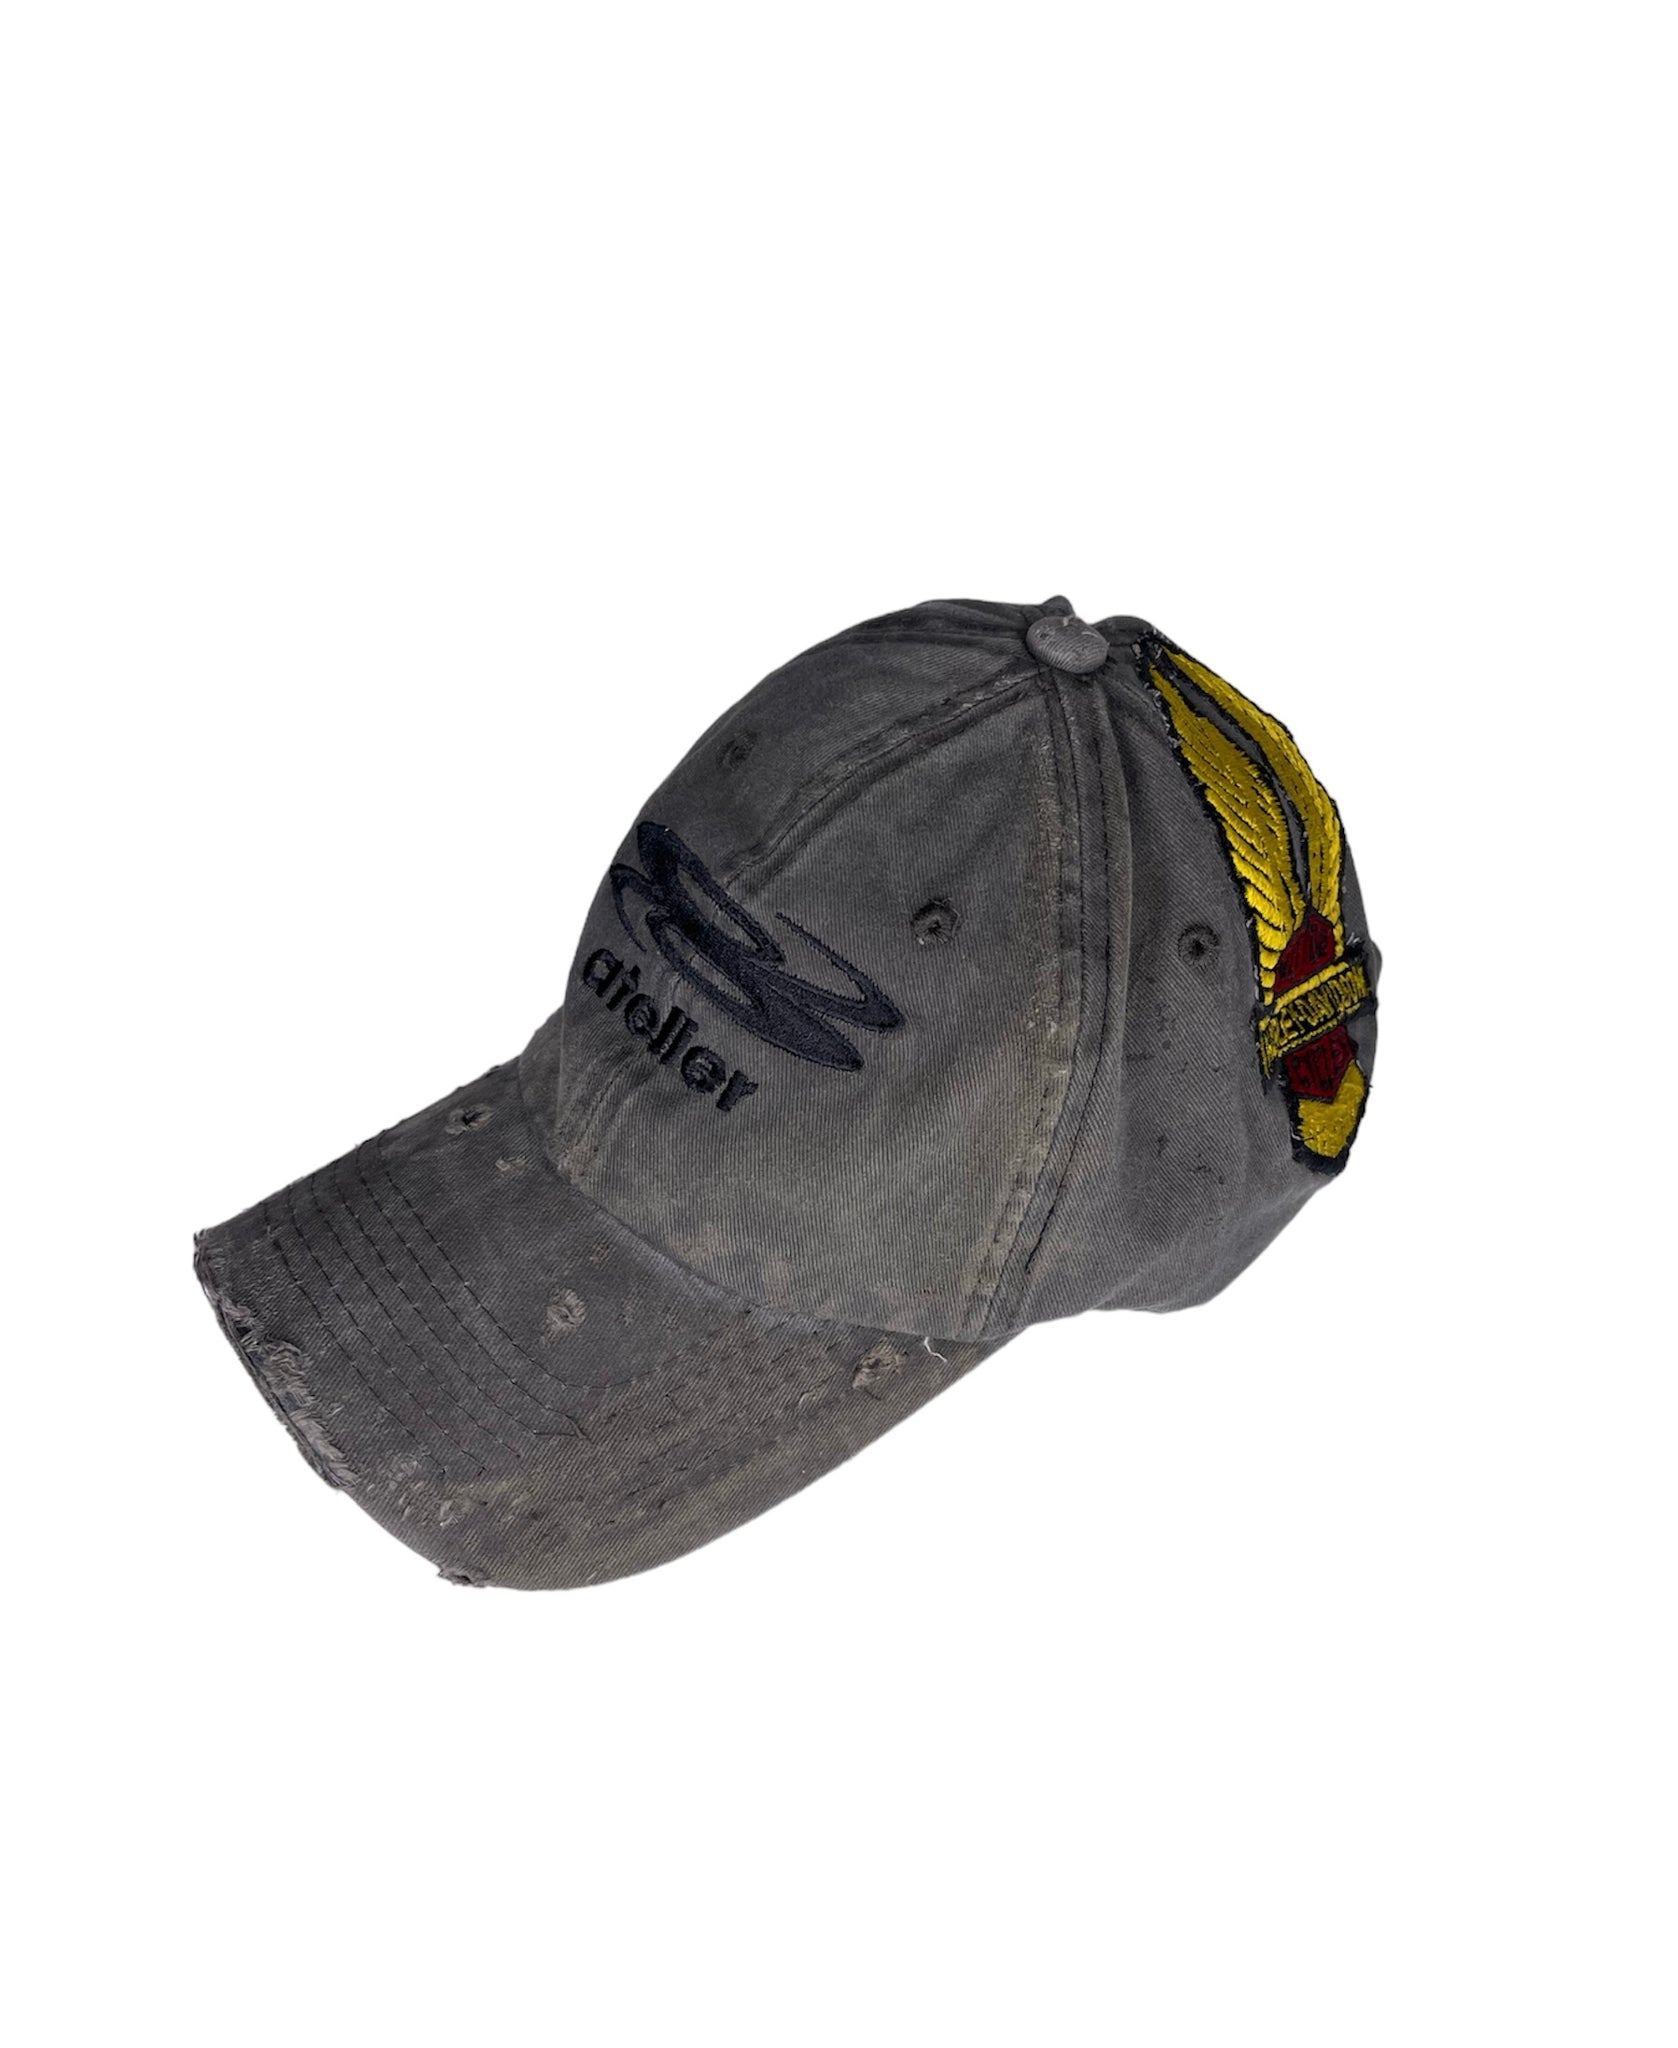 Atelier patch Distressed cap